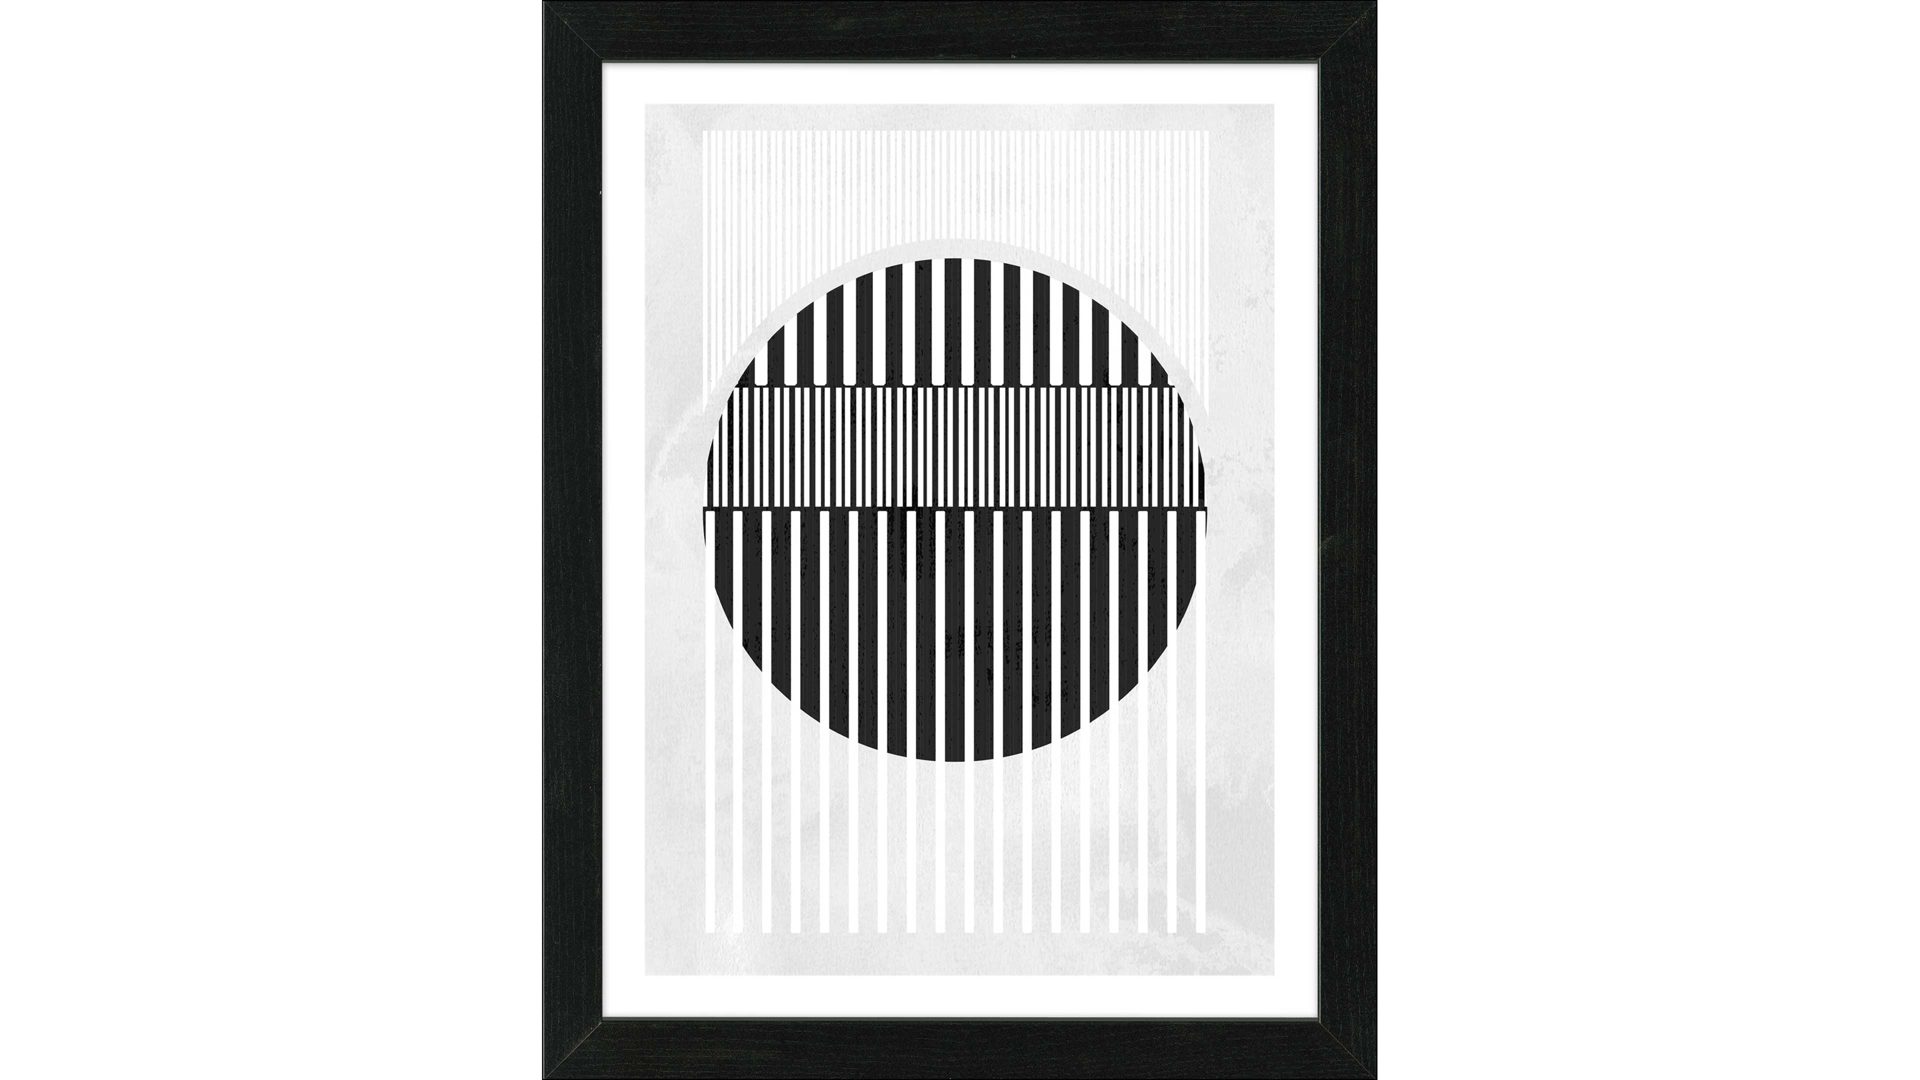 Kunstdruck Pro®art bilderpalette aus Karton / Papier / Pappe in Grau PRO®ART Kunstdruck Scandic Living Lines and shapes II - ca. 35 x 45 cm